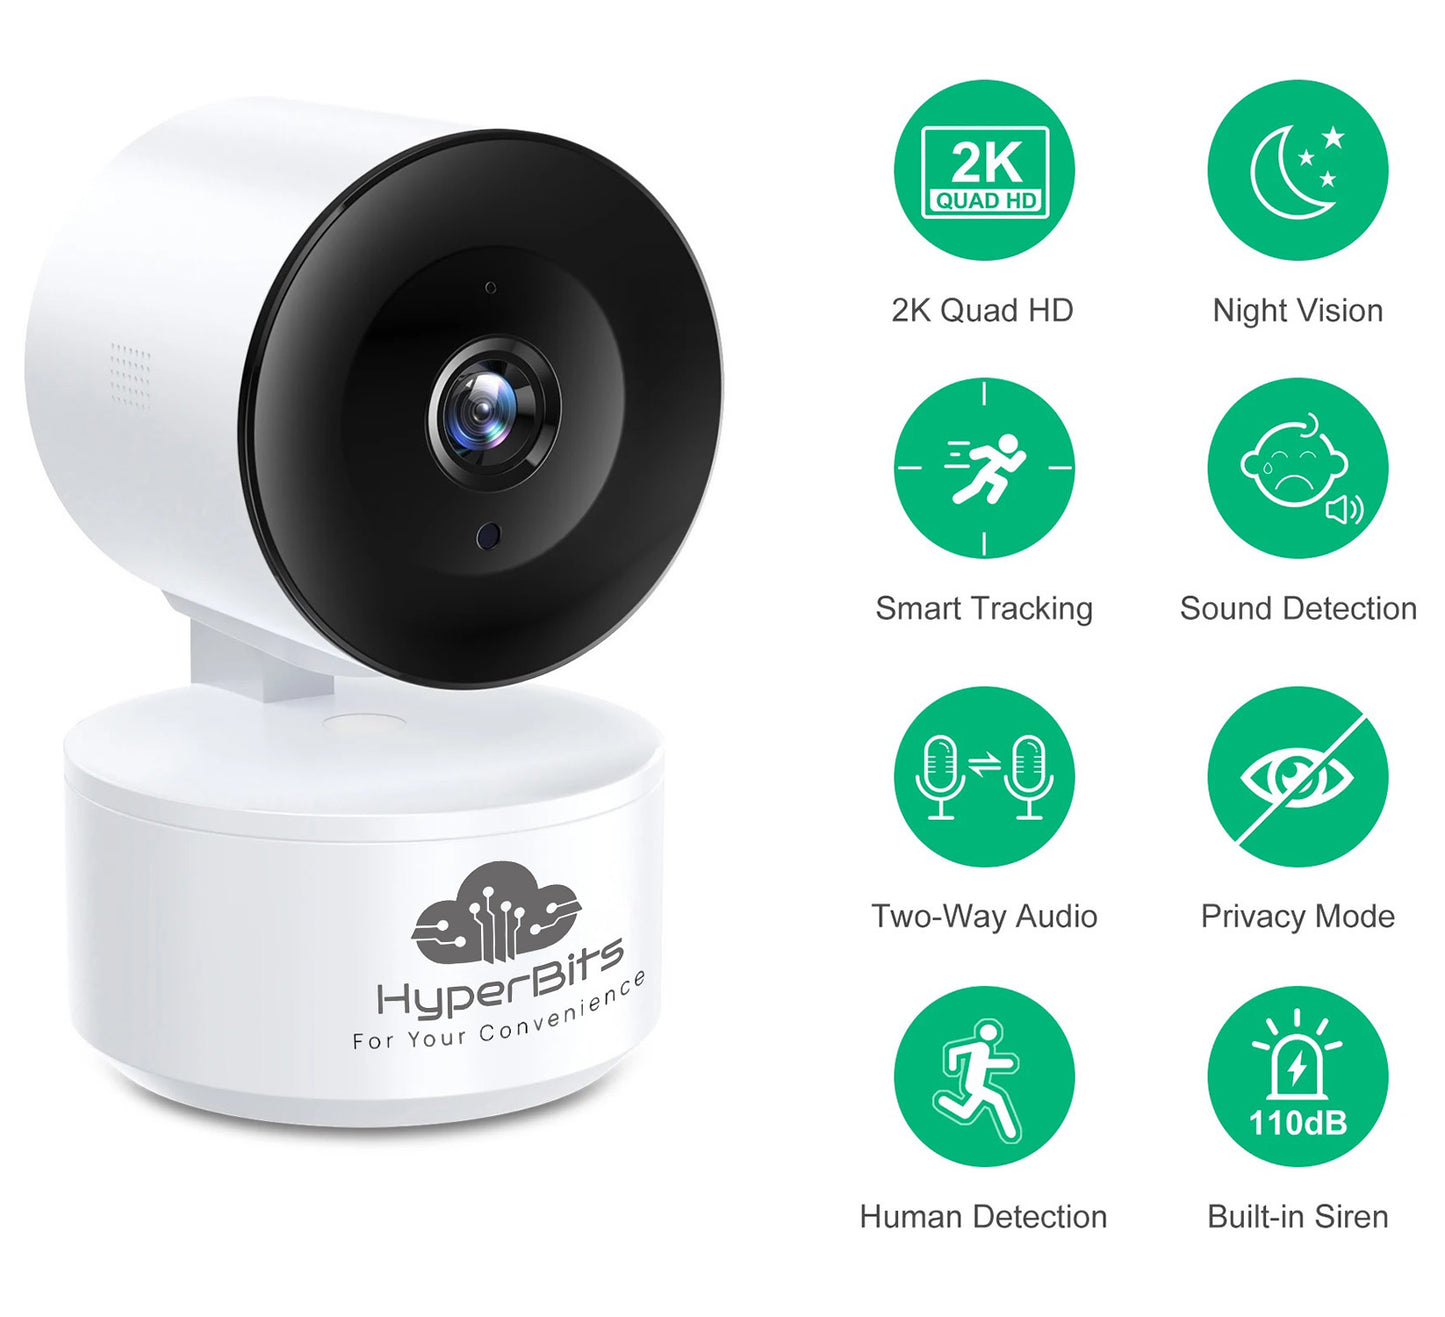 HYERBITS - indoor wireless security camera